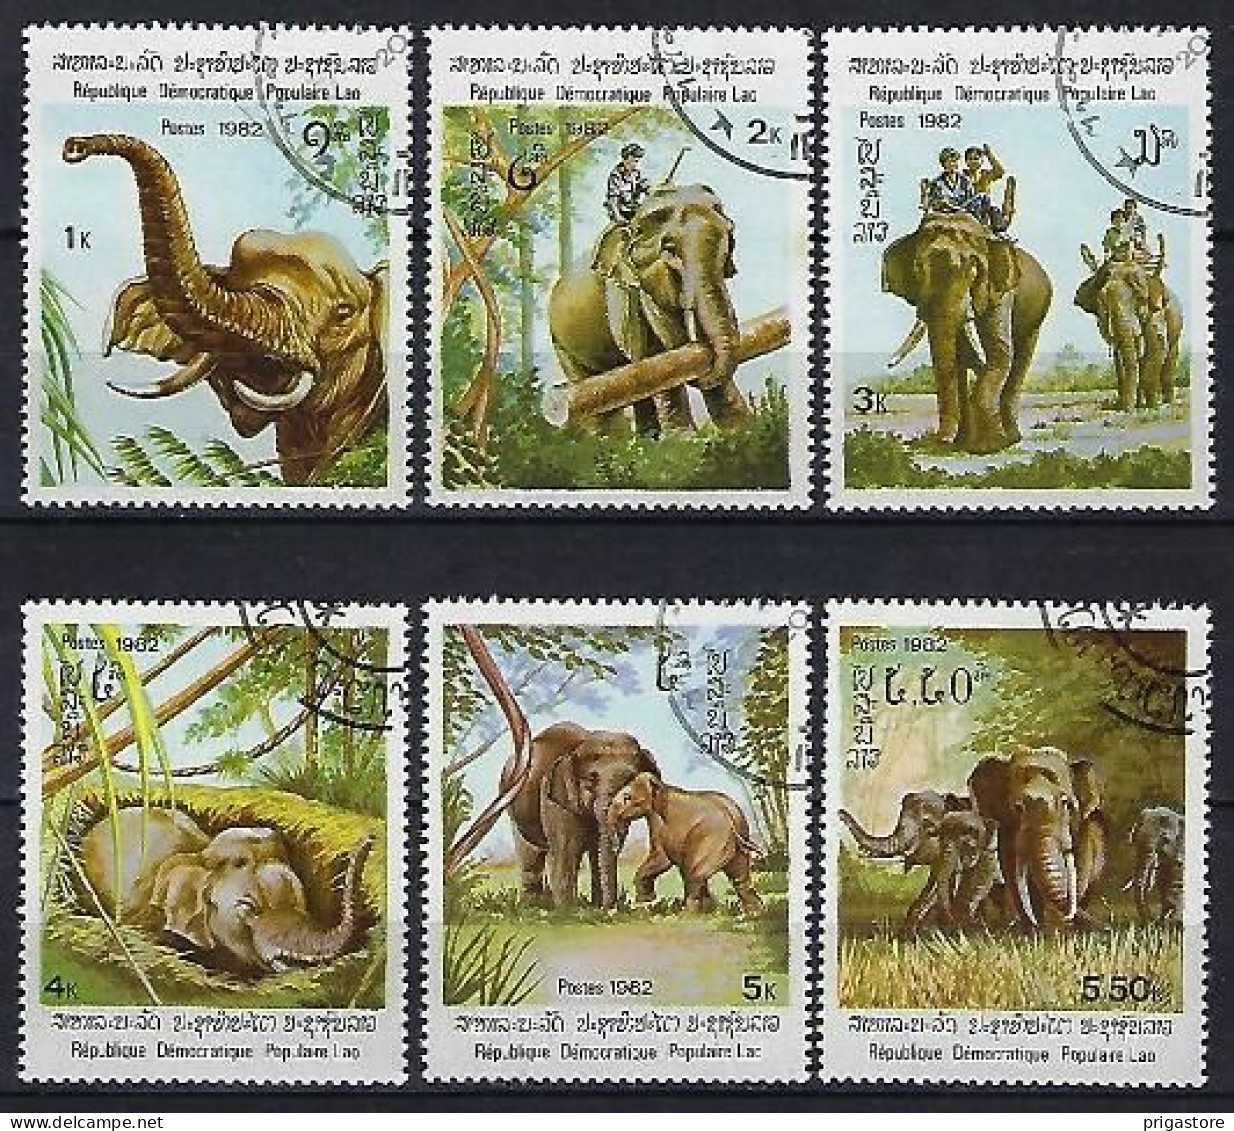 Eléphants Laos 1982 (604) Yvert 376 à 381 Oblitérés Used - Elefantes